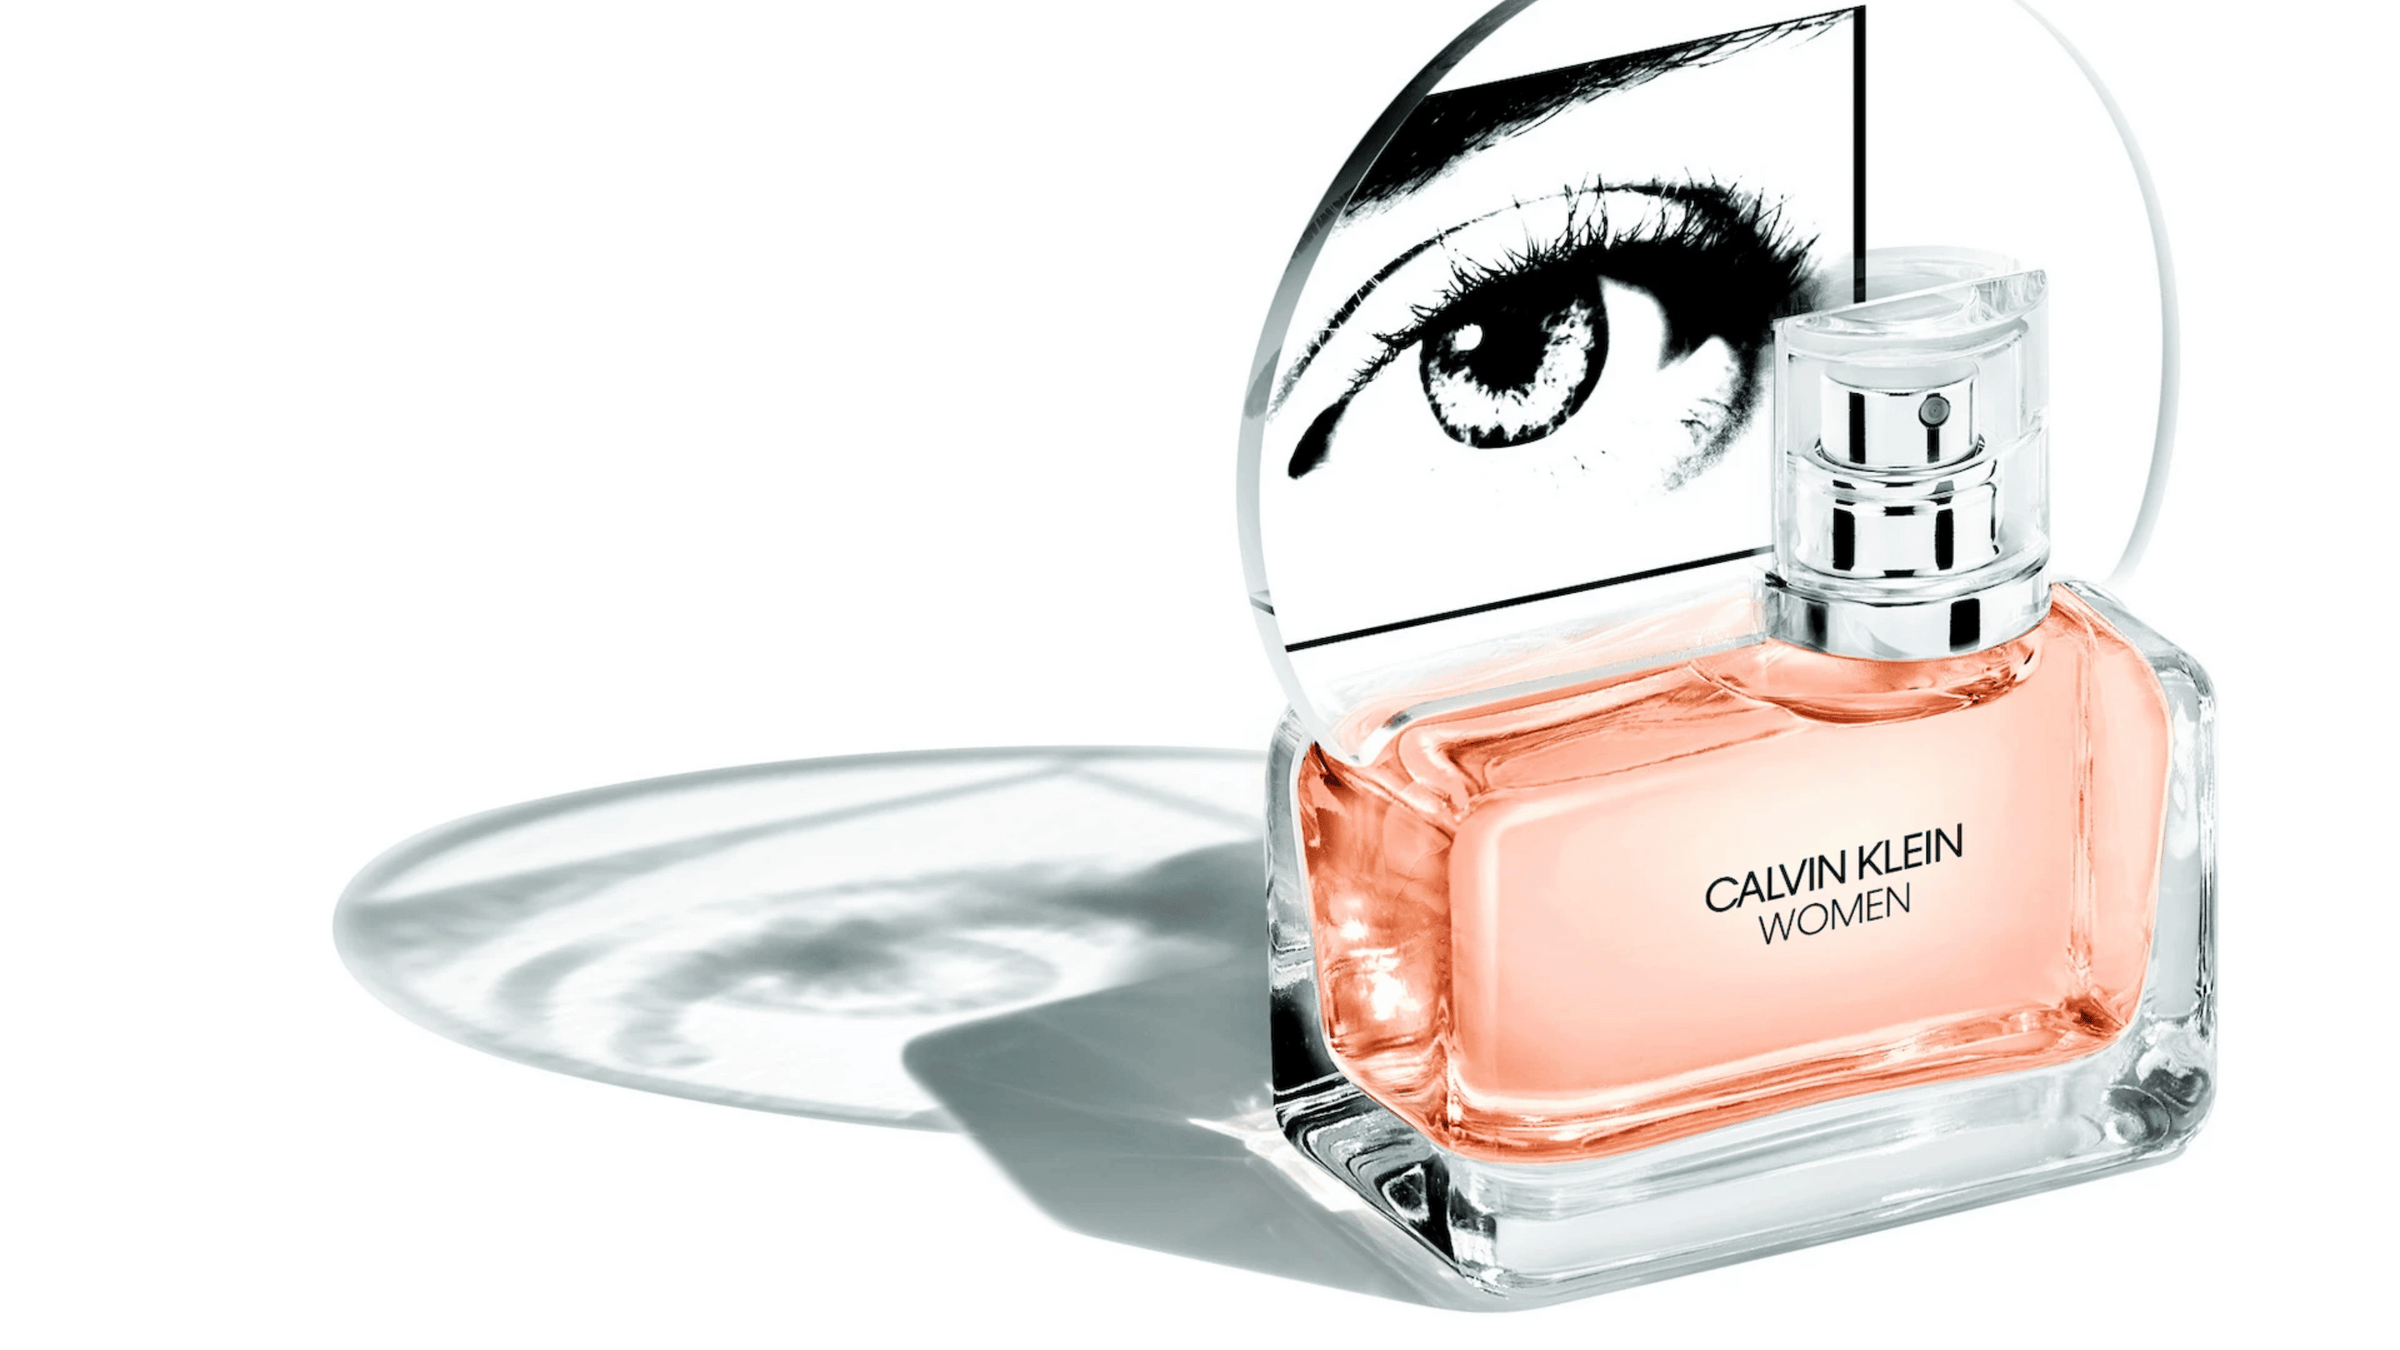 Parfym från Calvin Klein med texten "Women"